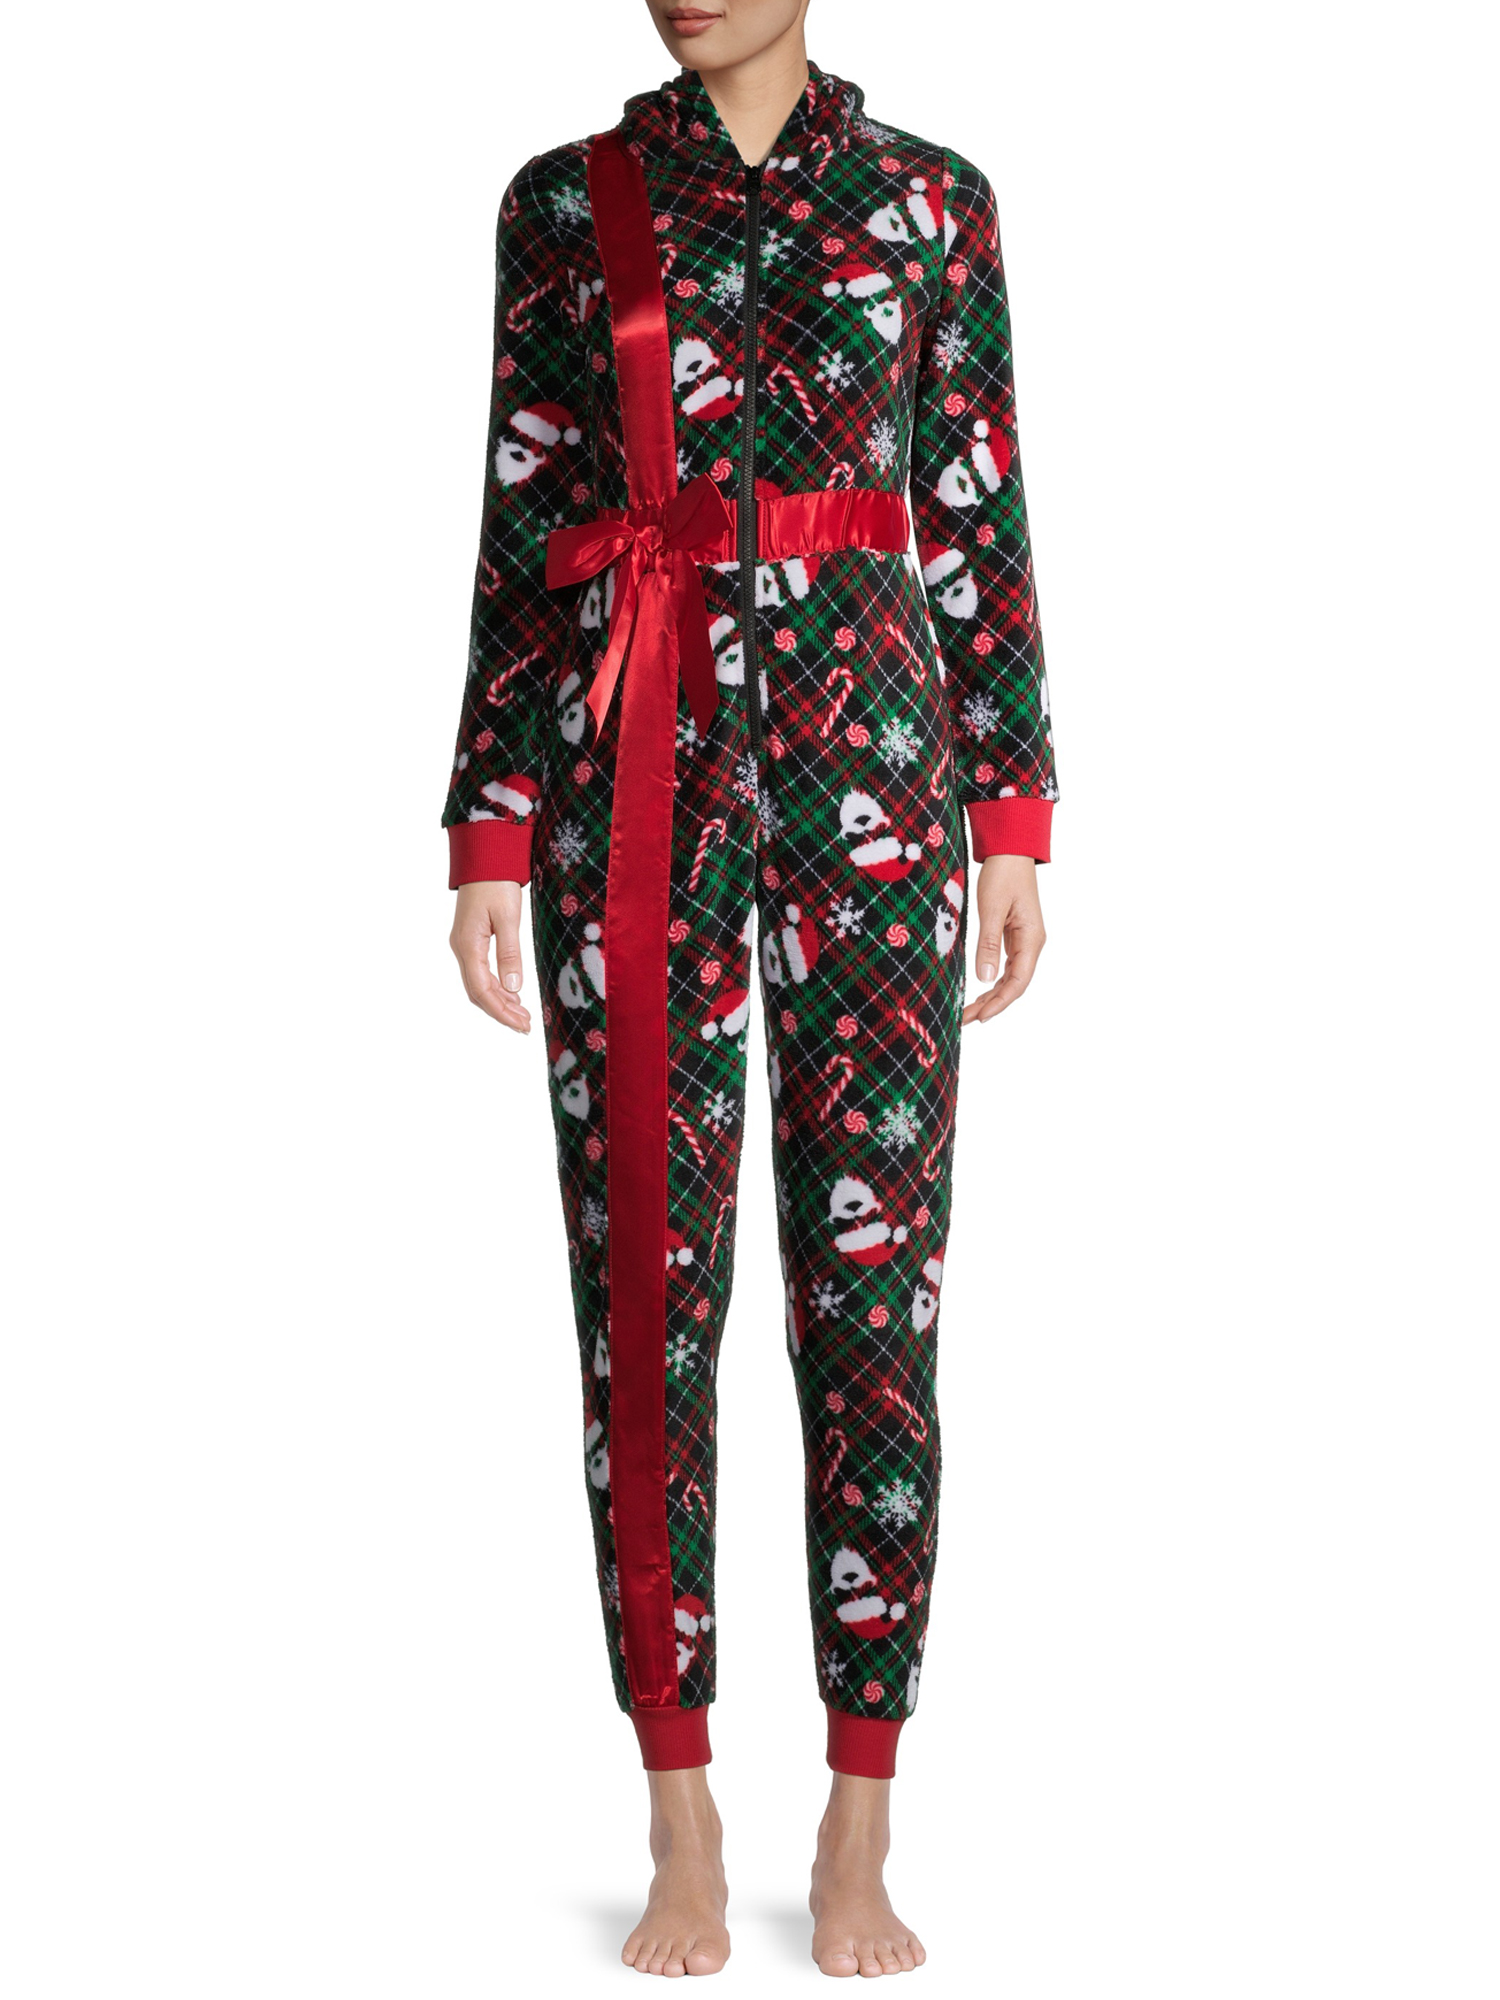 Derek Heart Women's and Women's Plus Christmas Present Pajamas Union Suit - image 5 of 6